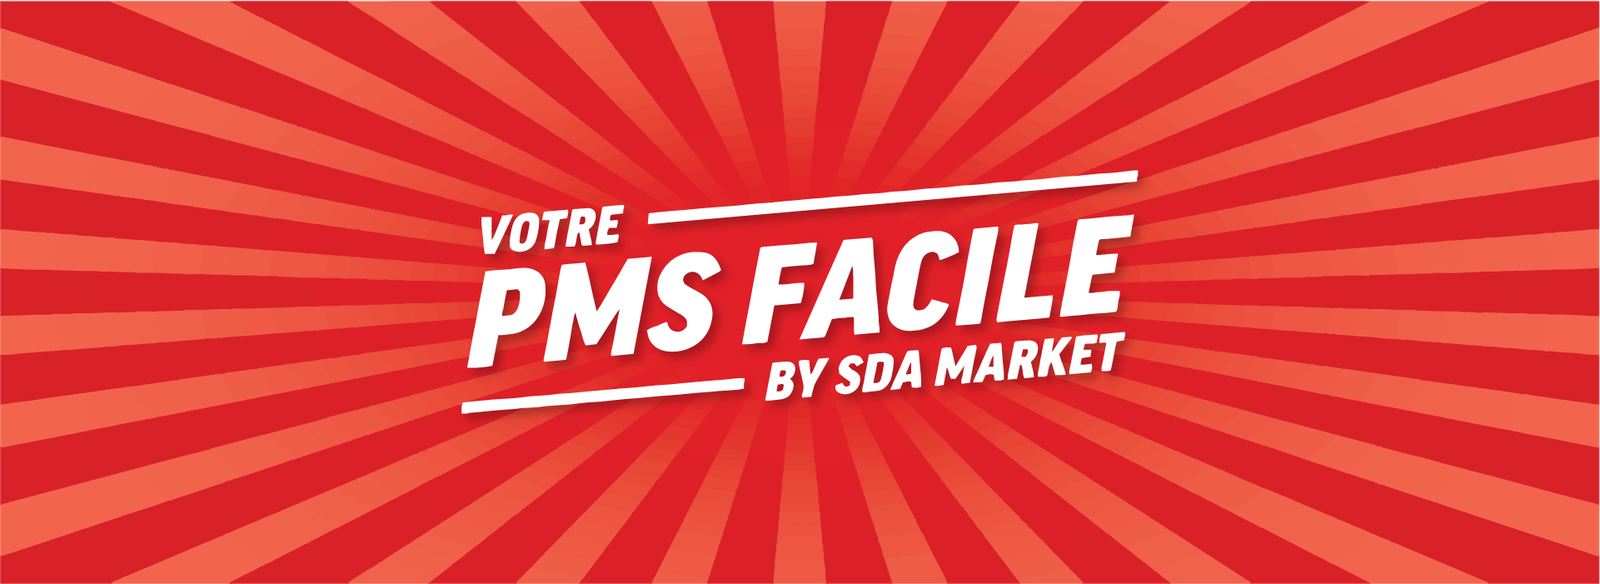 PMS Facile, SDA Market, grossiste alimentaire, grossiste Rouen